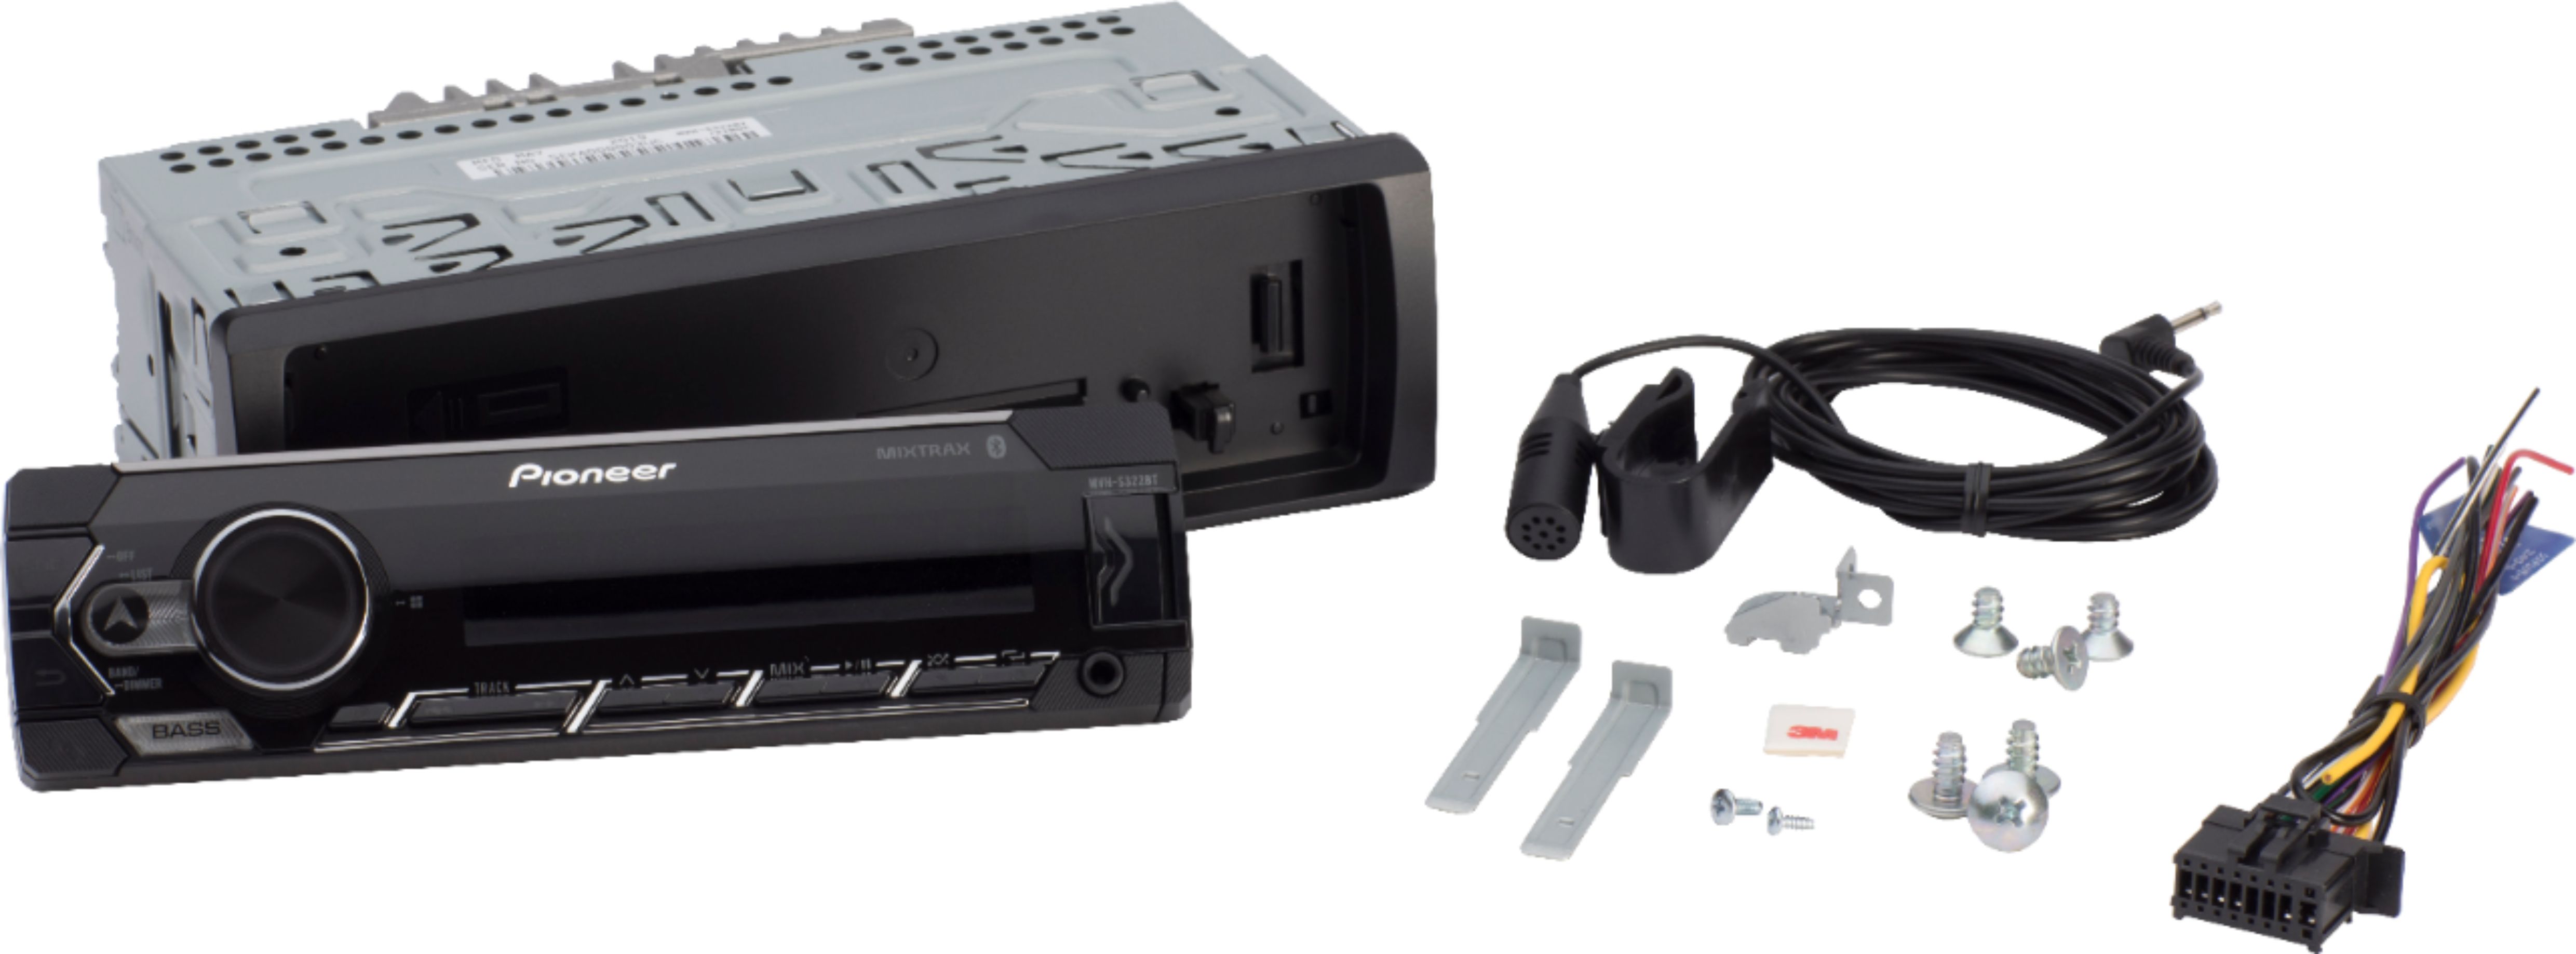 Pioneer MVH-S322BT - Digital Media Receiver with Bluetooth